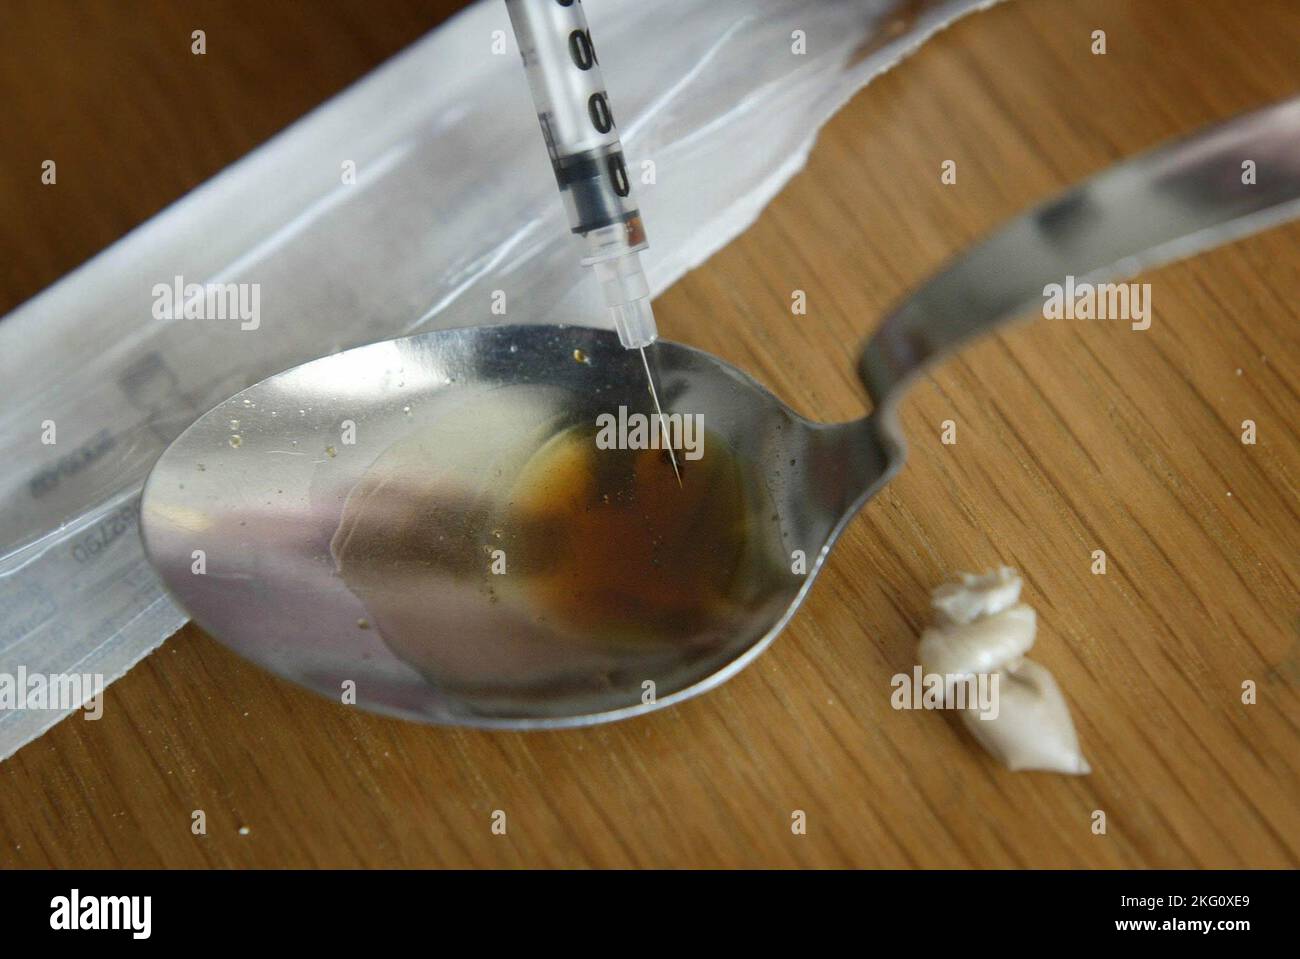 Drogenkonsumenten -Fotos und -Bildmaterial in hoher Auflösung – Alamy